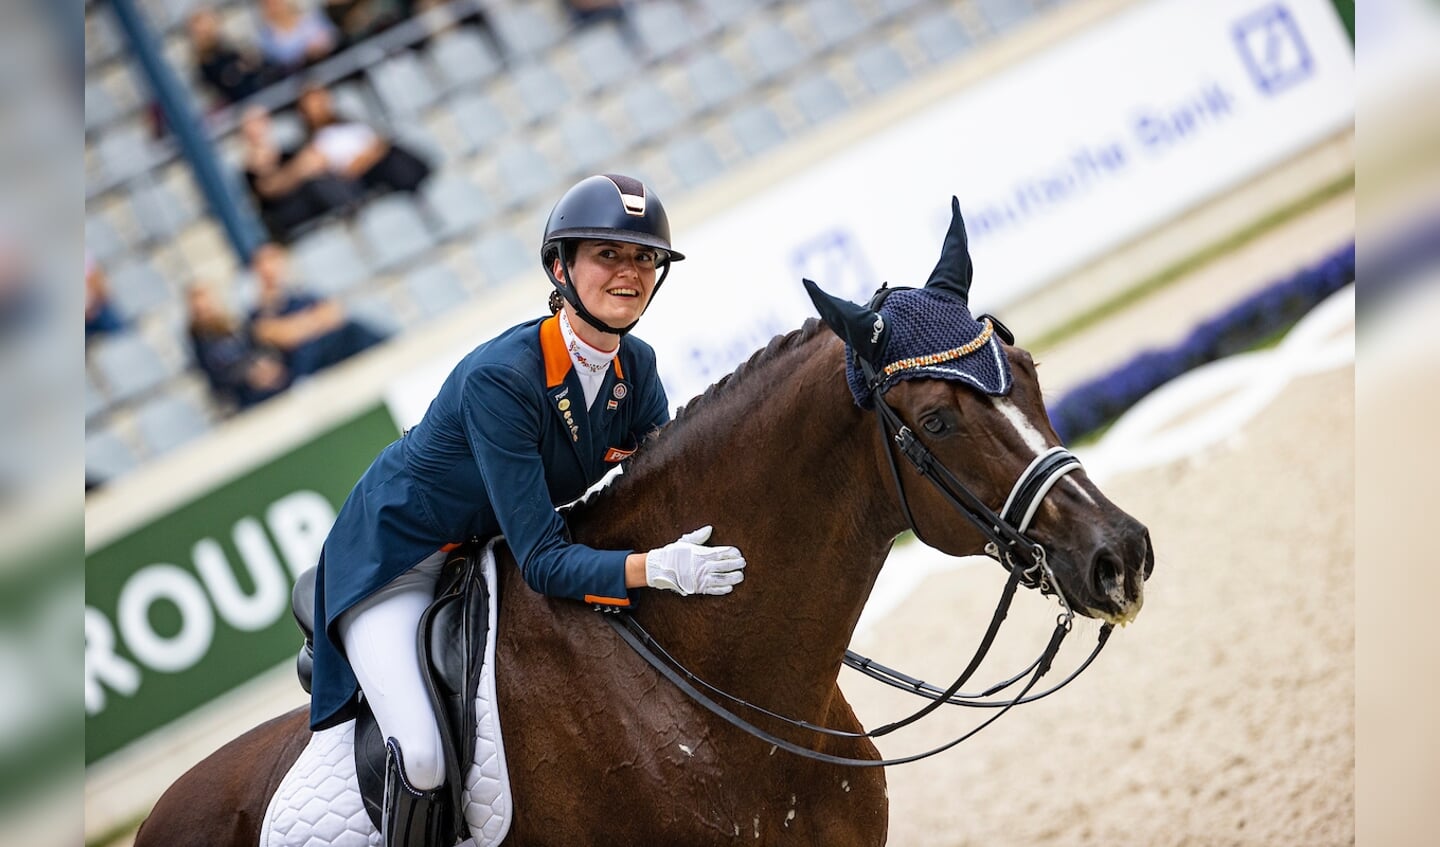 Thalia Rockx - Golden Dancer de la Fazenda
World Equestrian Festival CHIO Aachen 2021
© DigiShots